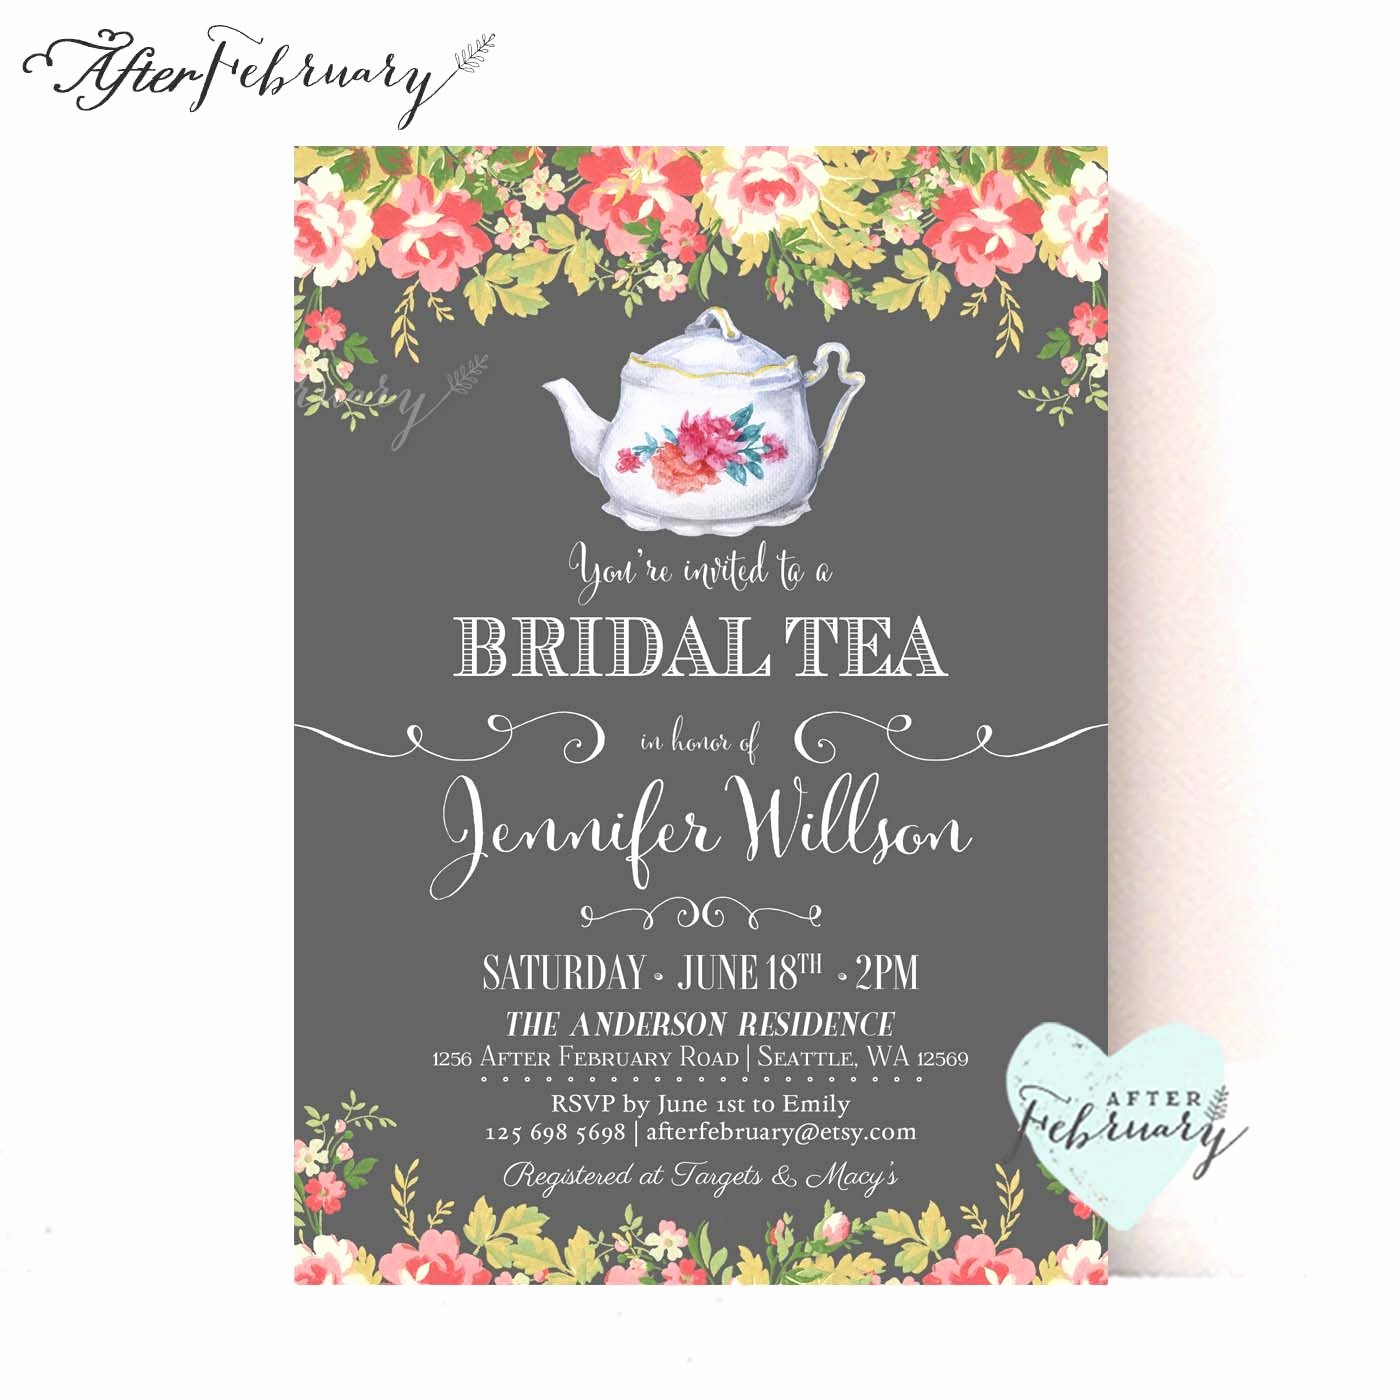 Bridal Shower Invite Template Inspirational Bridal Shower Invite Bridal Shower Invite Wording Card